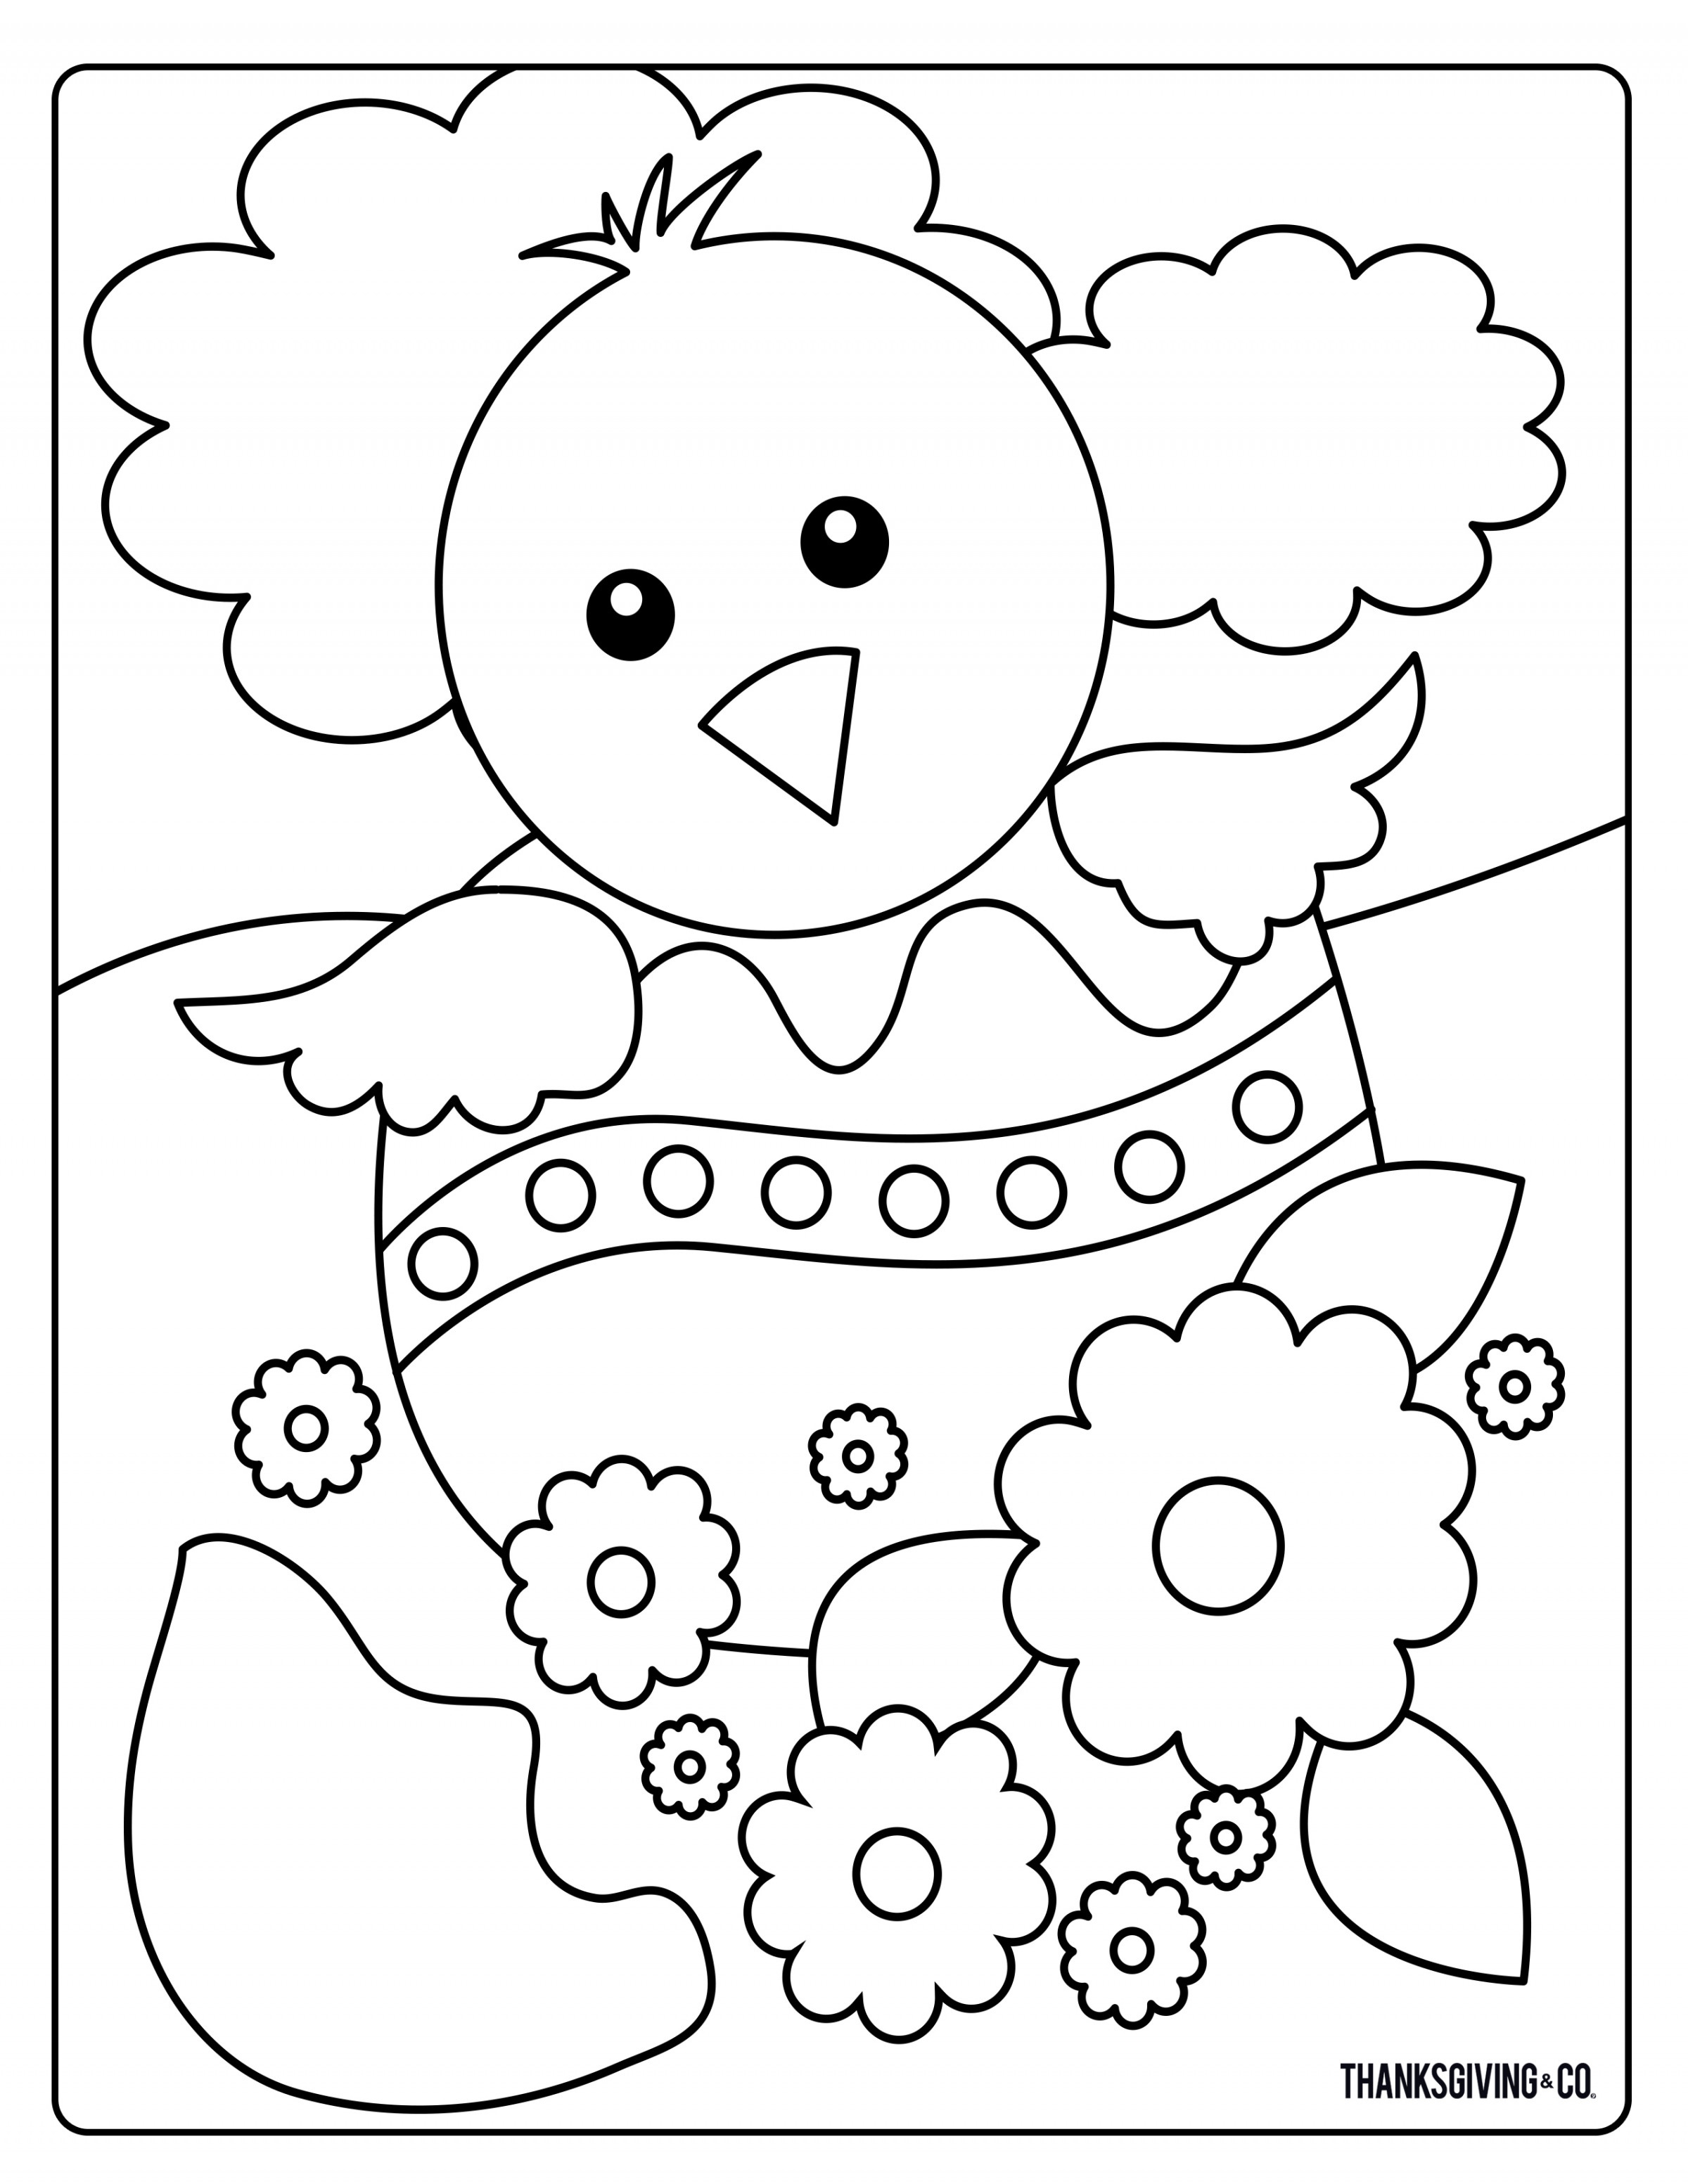 Chick Coloring Pages (Page 1) - Line.17QQ.com